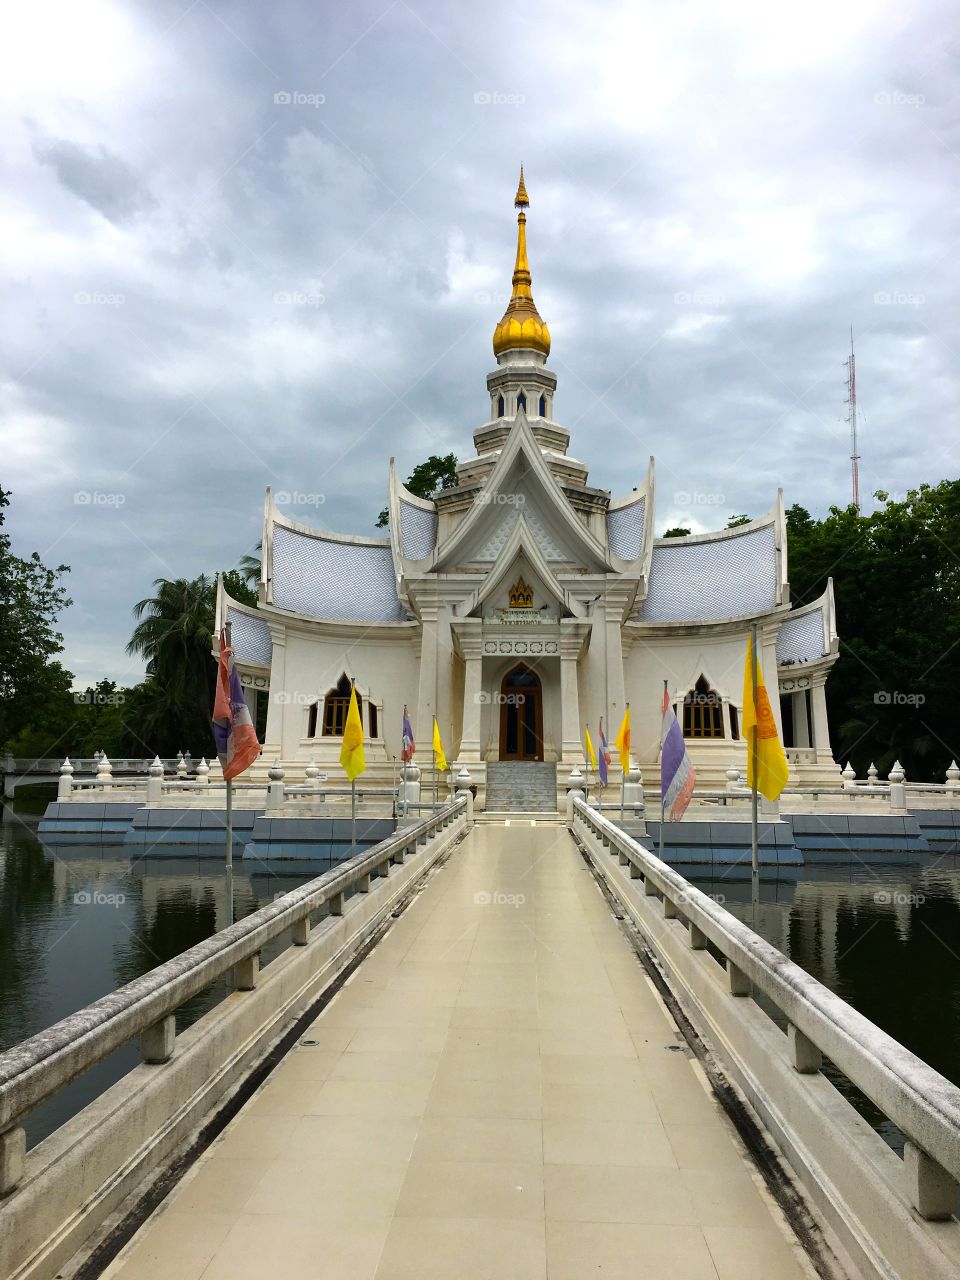 Temple 59